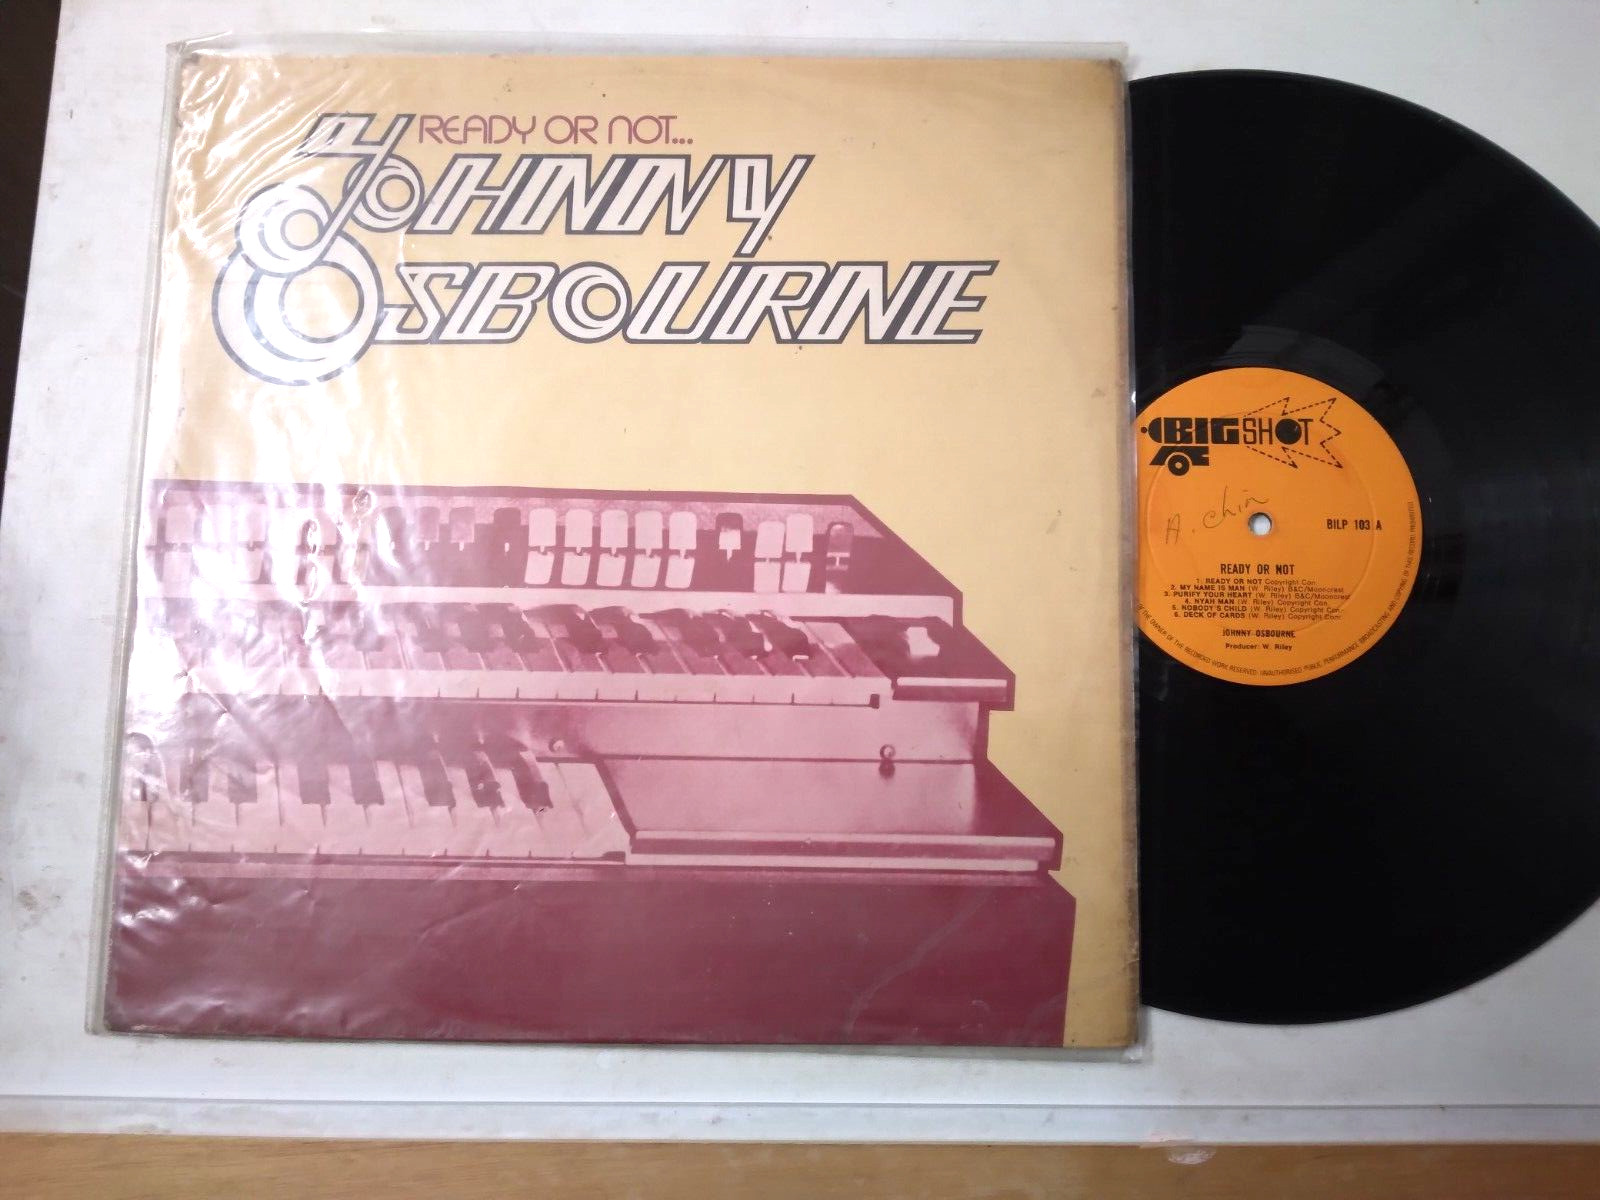 Johnny Osbourne – Ready Or Not - Vinyl LP 1973